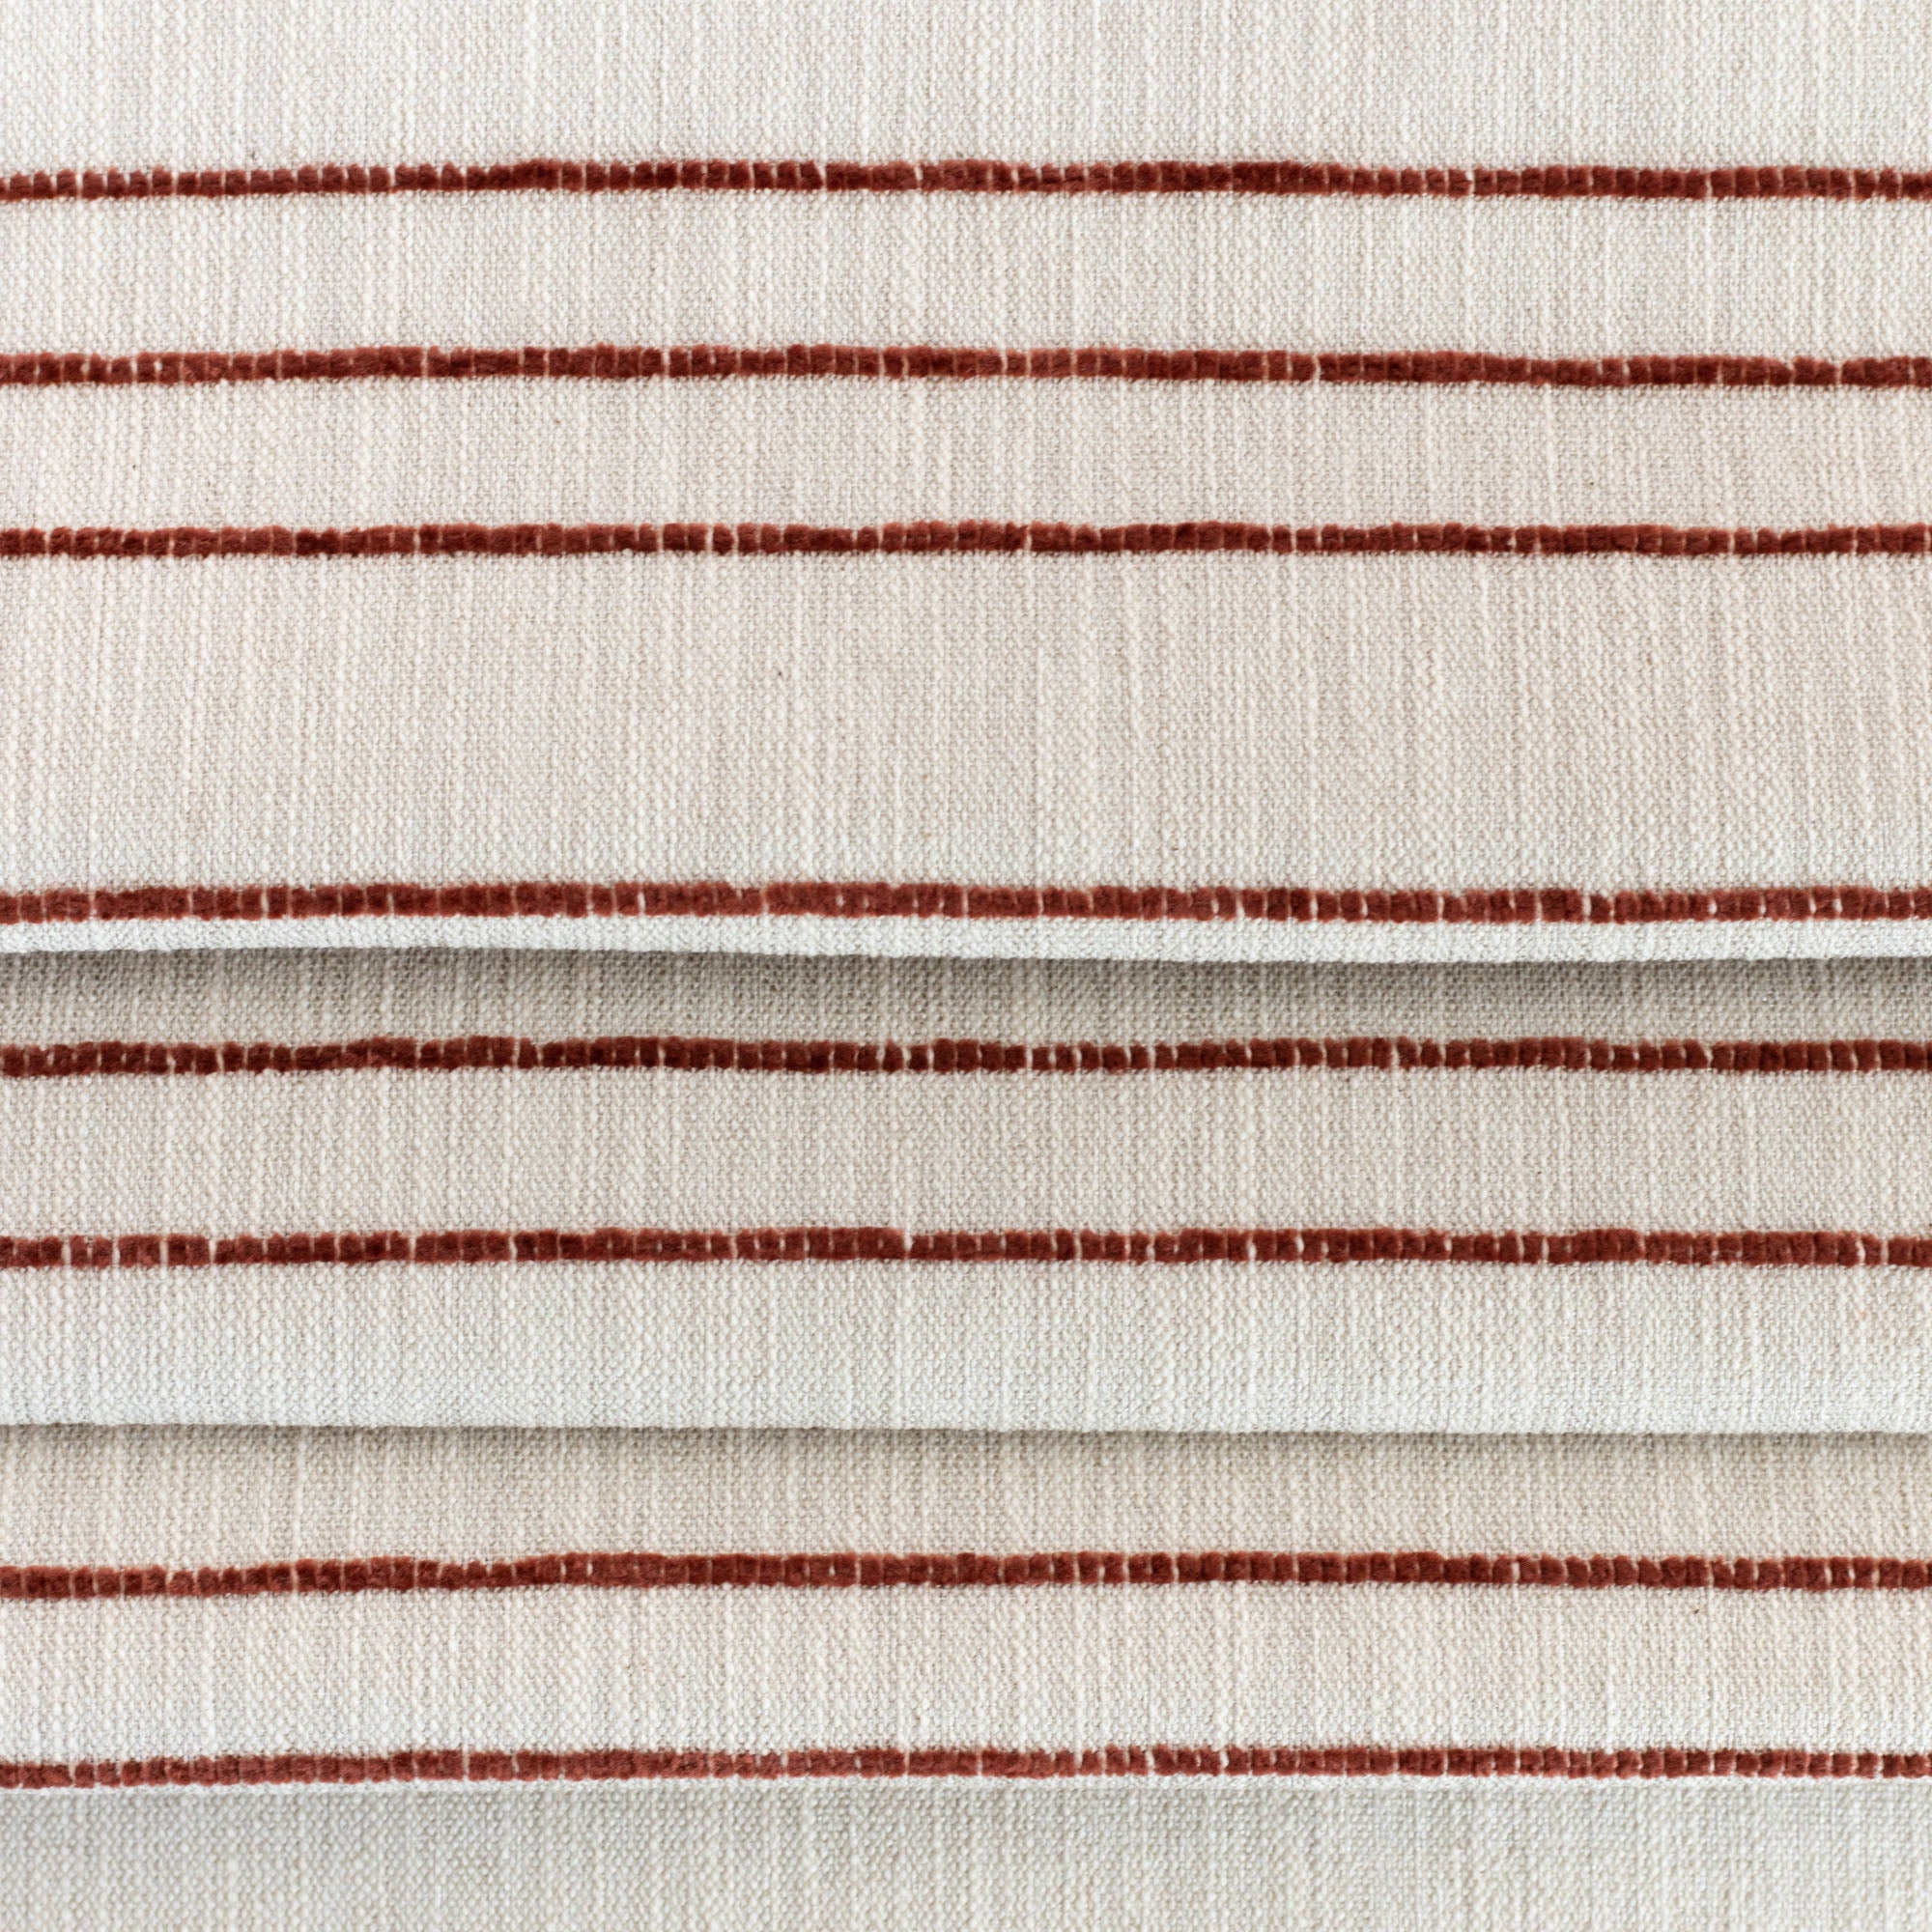 Spar Stripe Fabric, Russet : a rusty red horizontal stripe home decor fabric : view 2